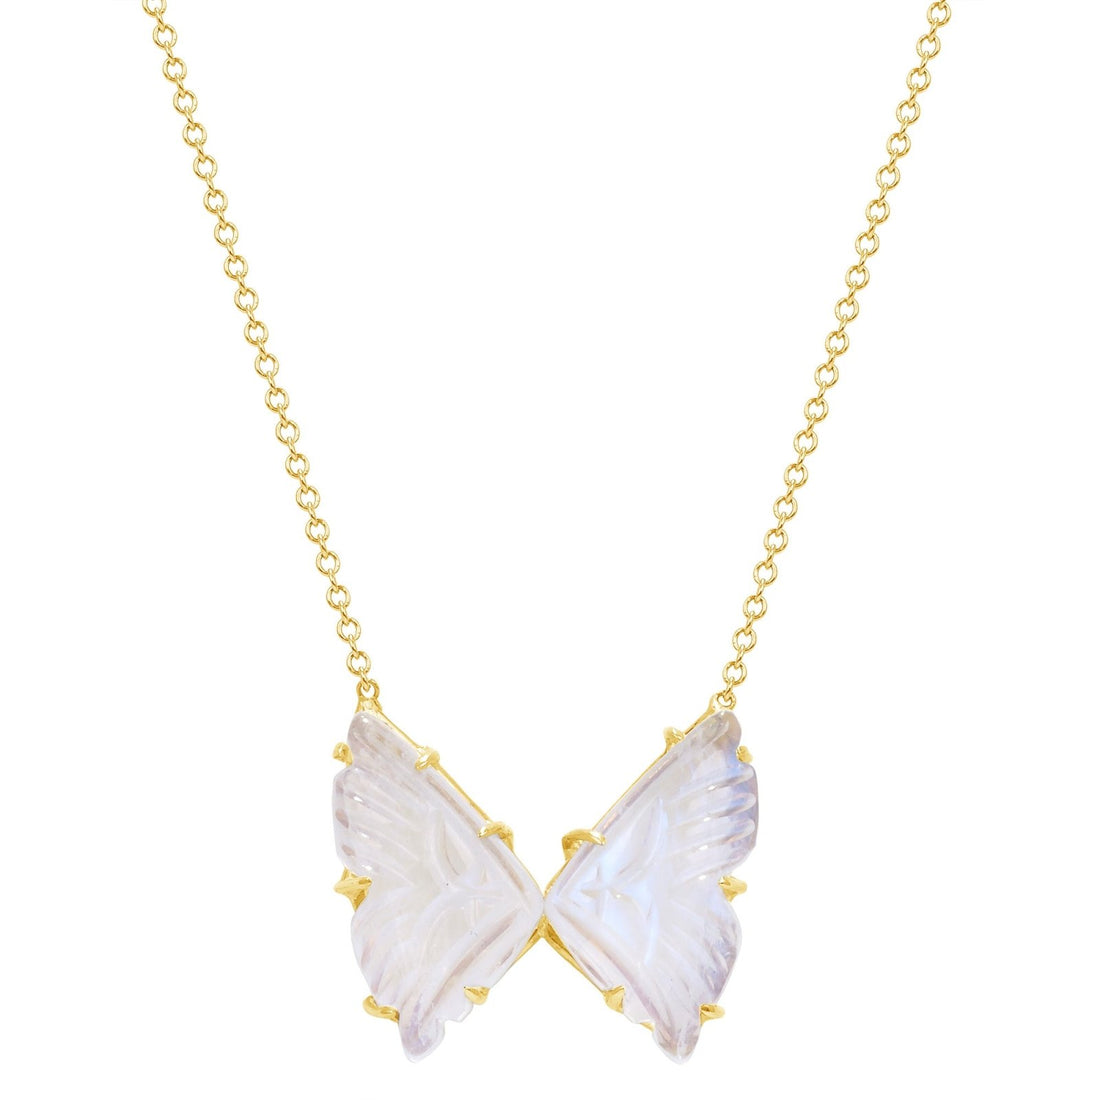 One of a kind Moonstone Butterfly Necklace - Ele Keats Jewelry